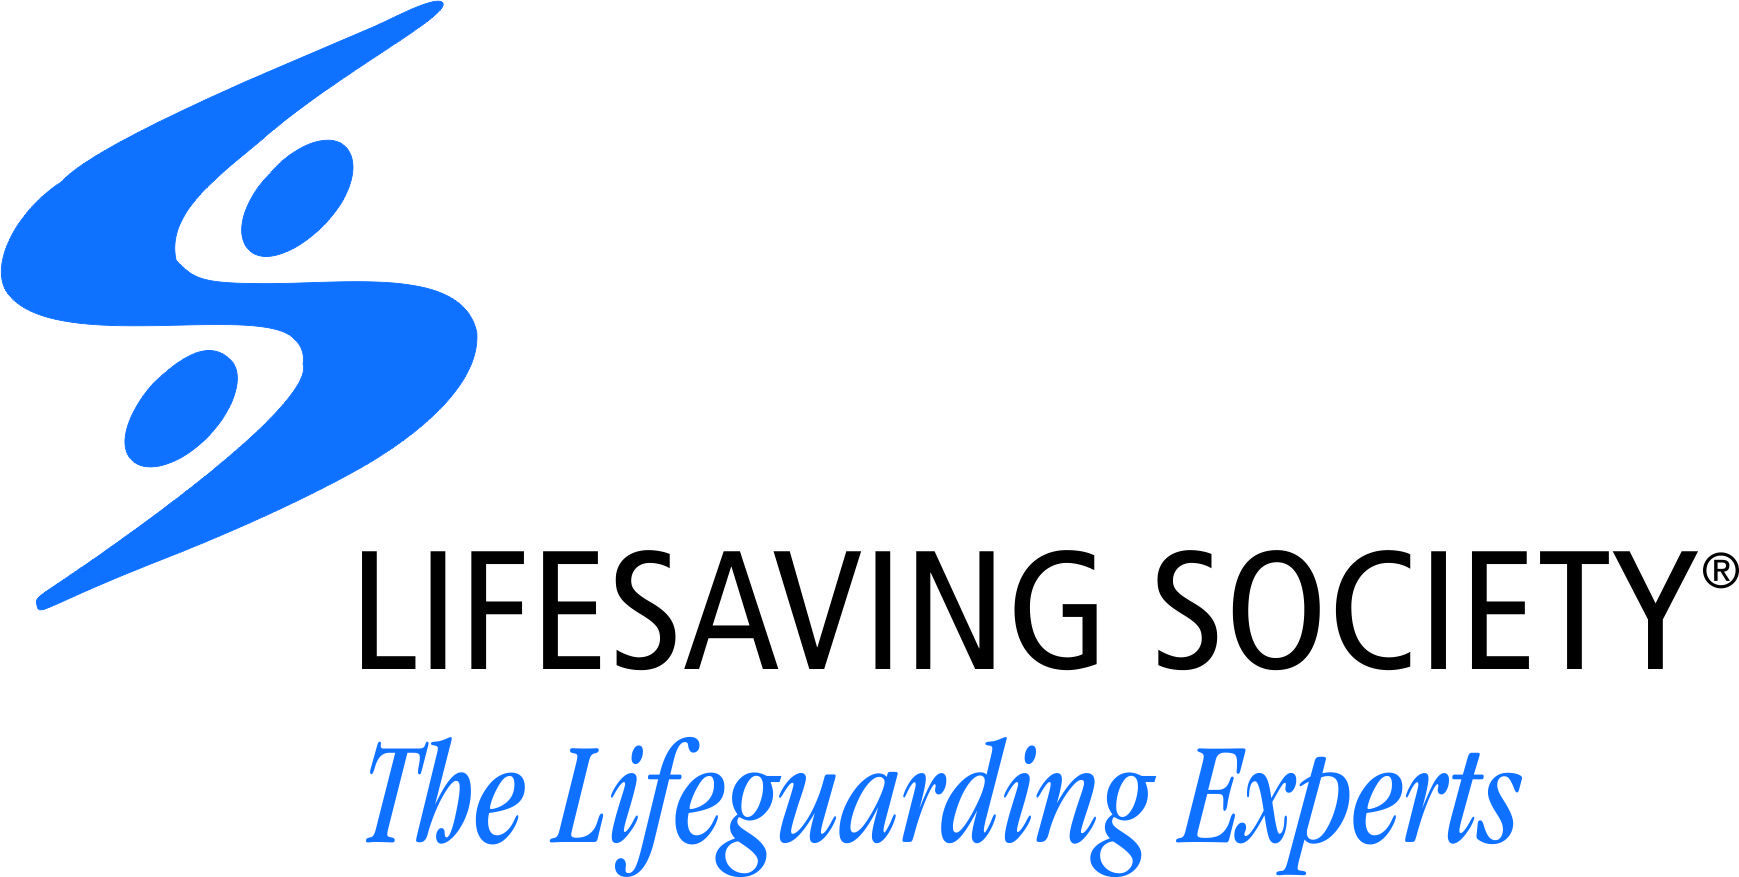 lifesaving society logo